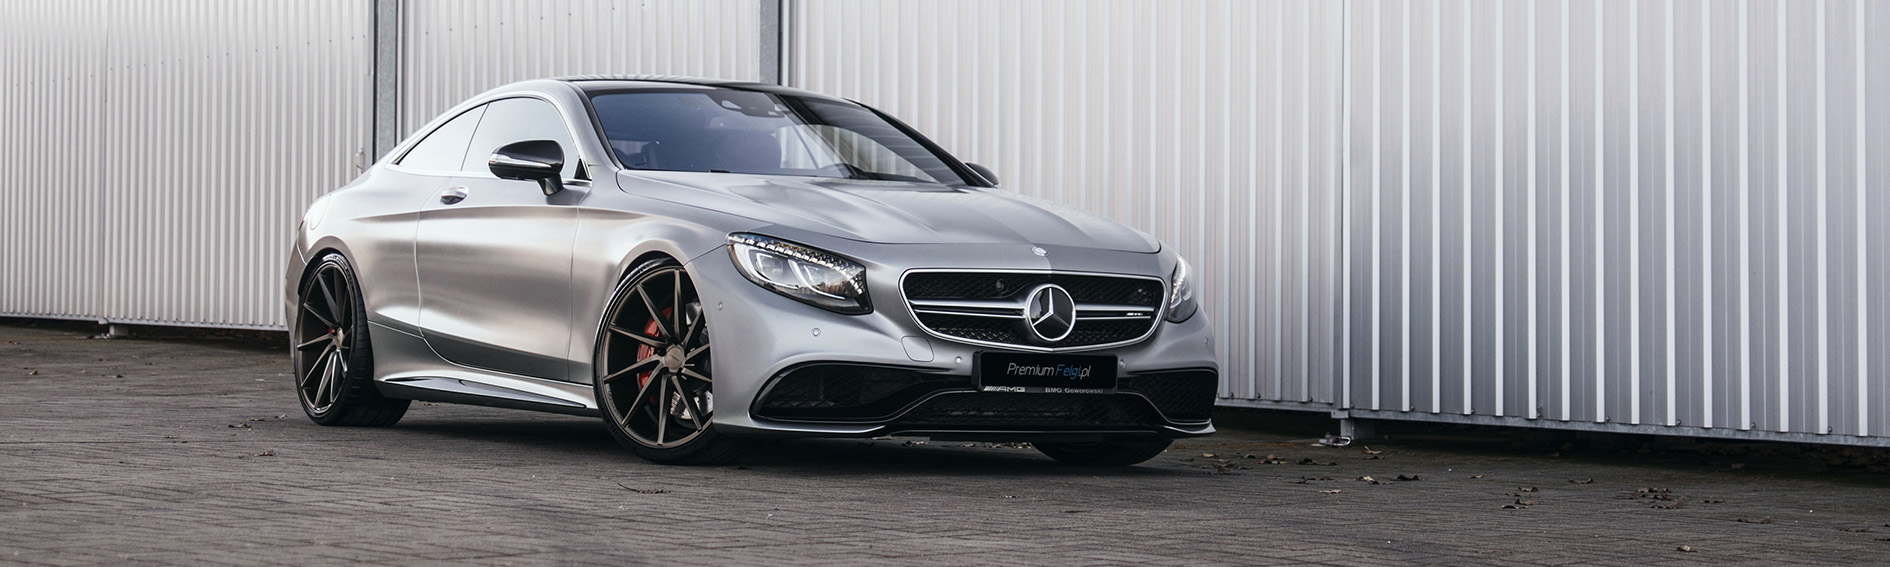 Customer car gallery - wheels for Mercedes-AMG S63 Coupé | Vossen CVT - PremiumFelgi